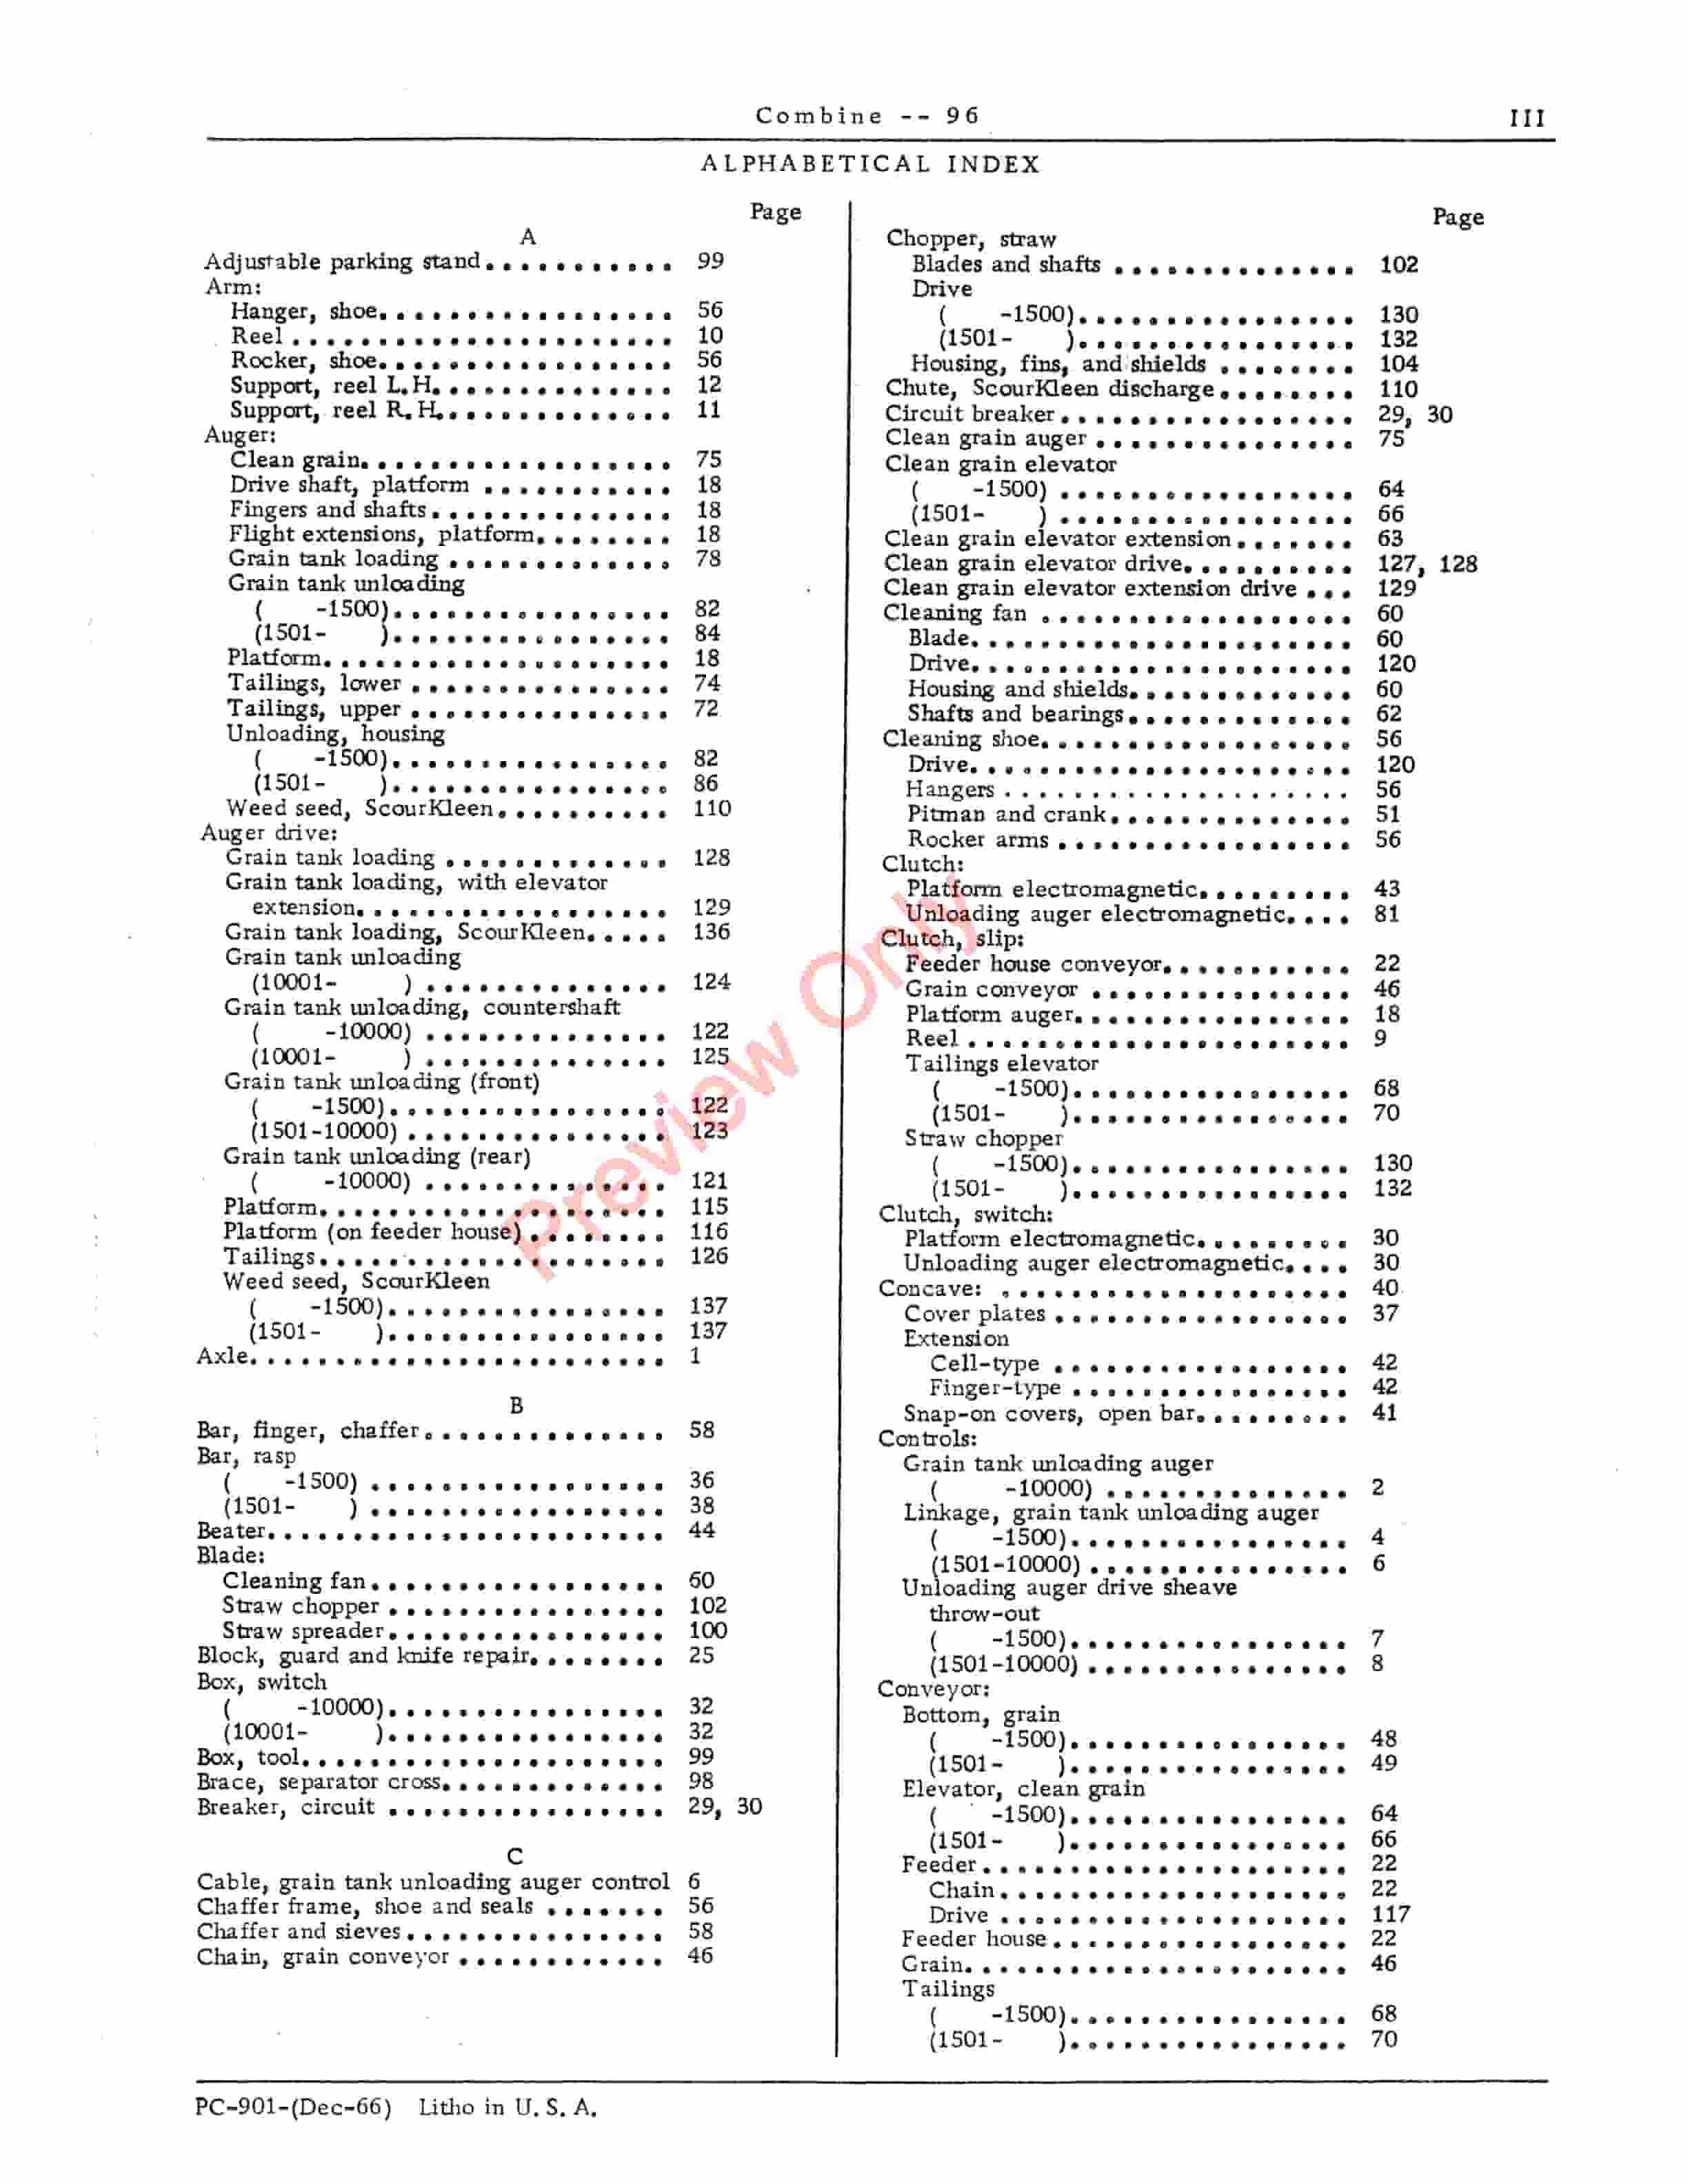 John Deere 96 Combine Parts Catalog PC901 01DEC66-5